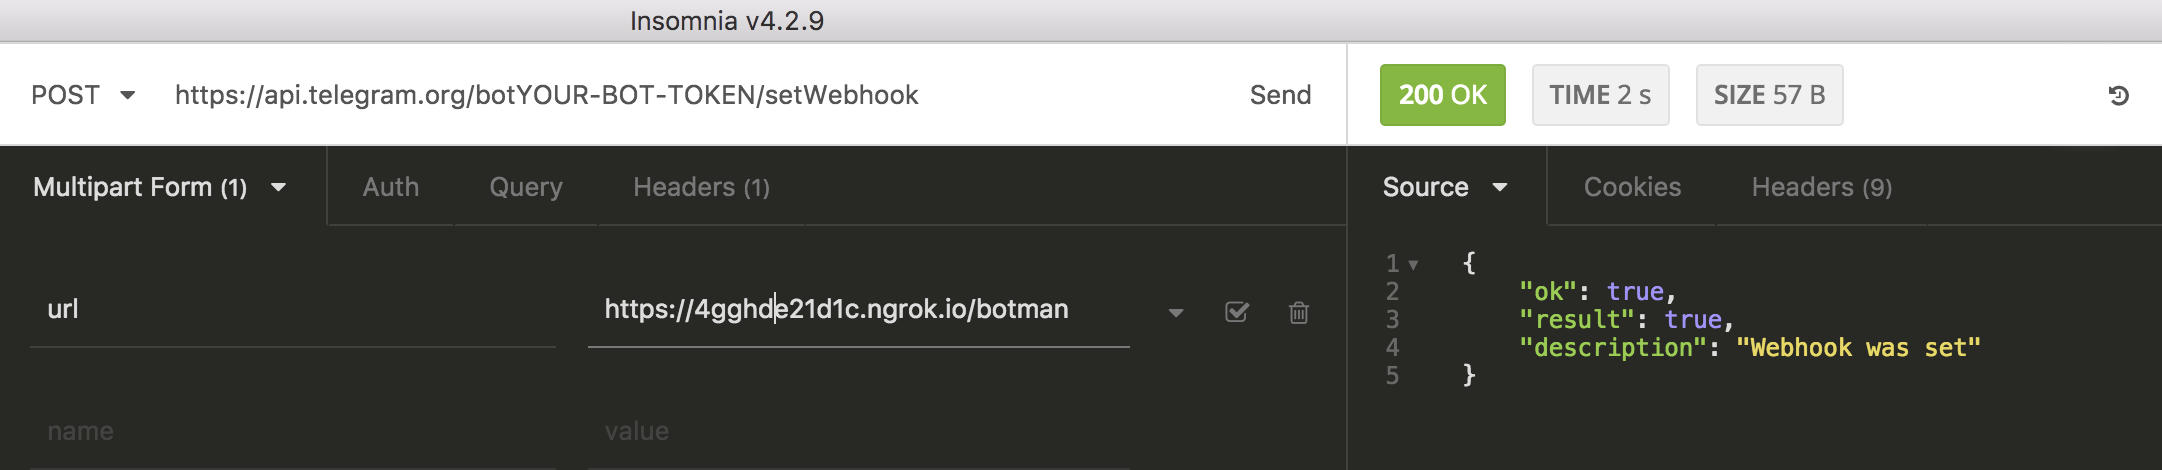 How to setup the Telegram bot webhook